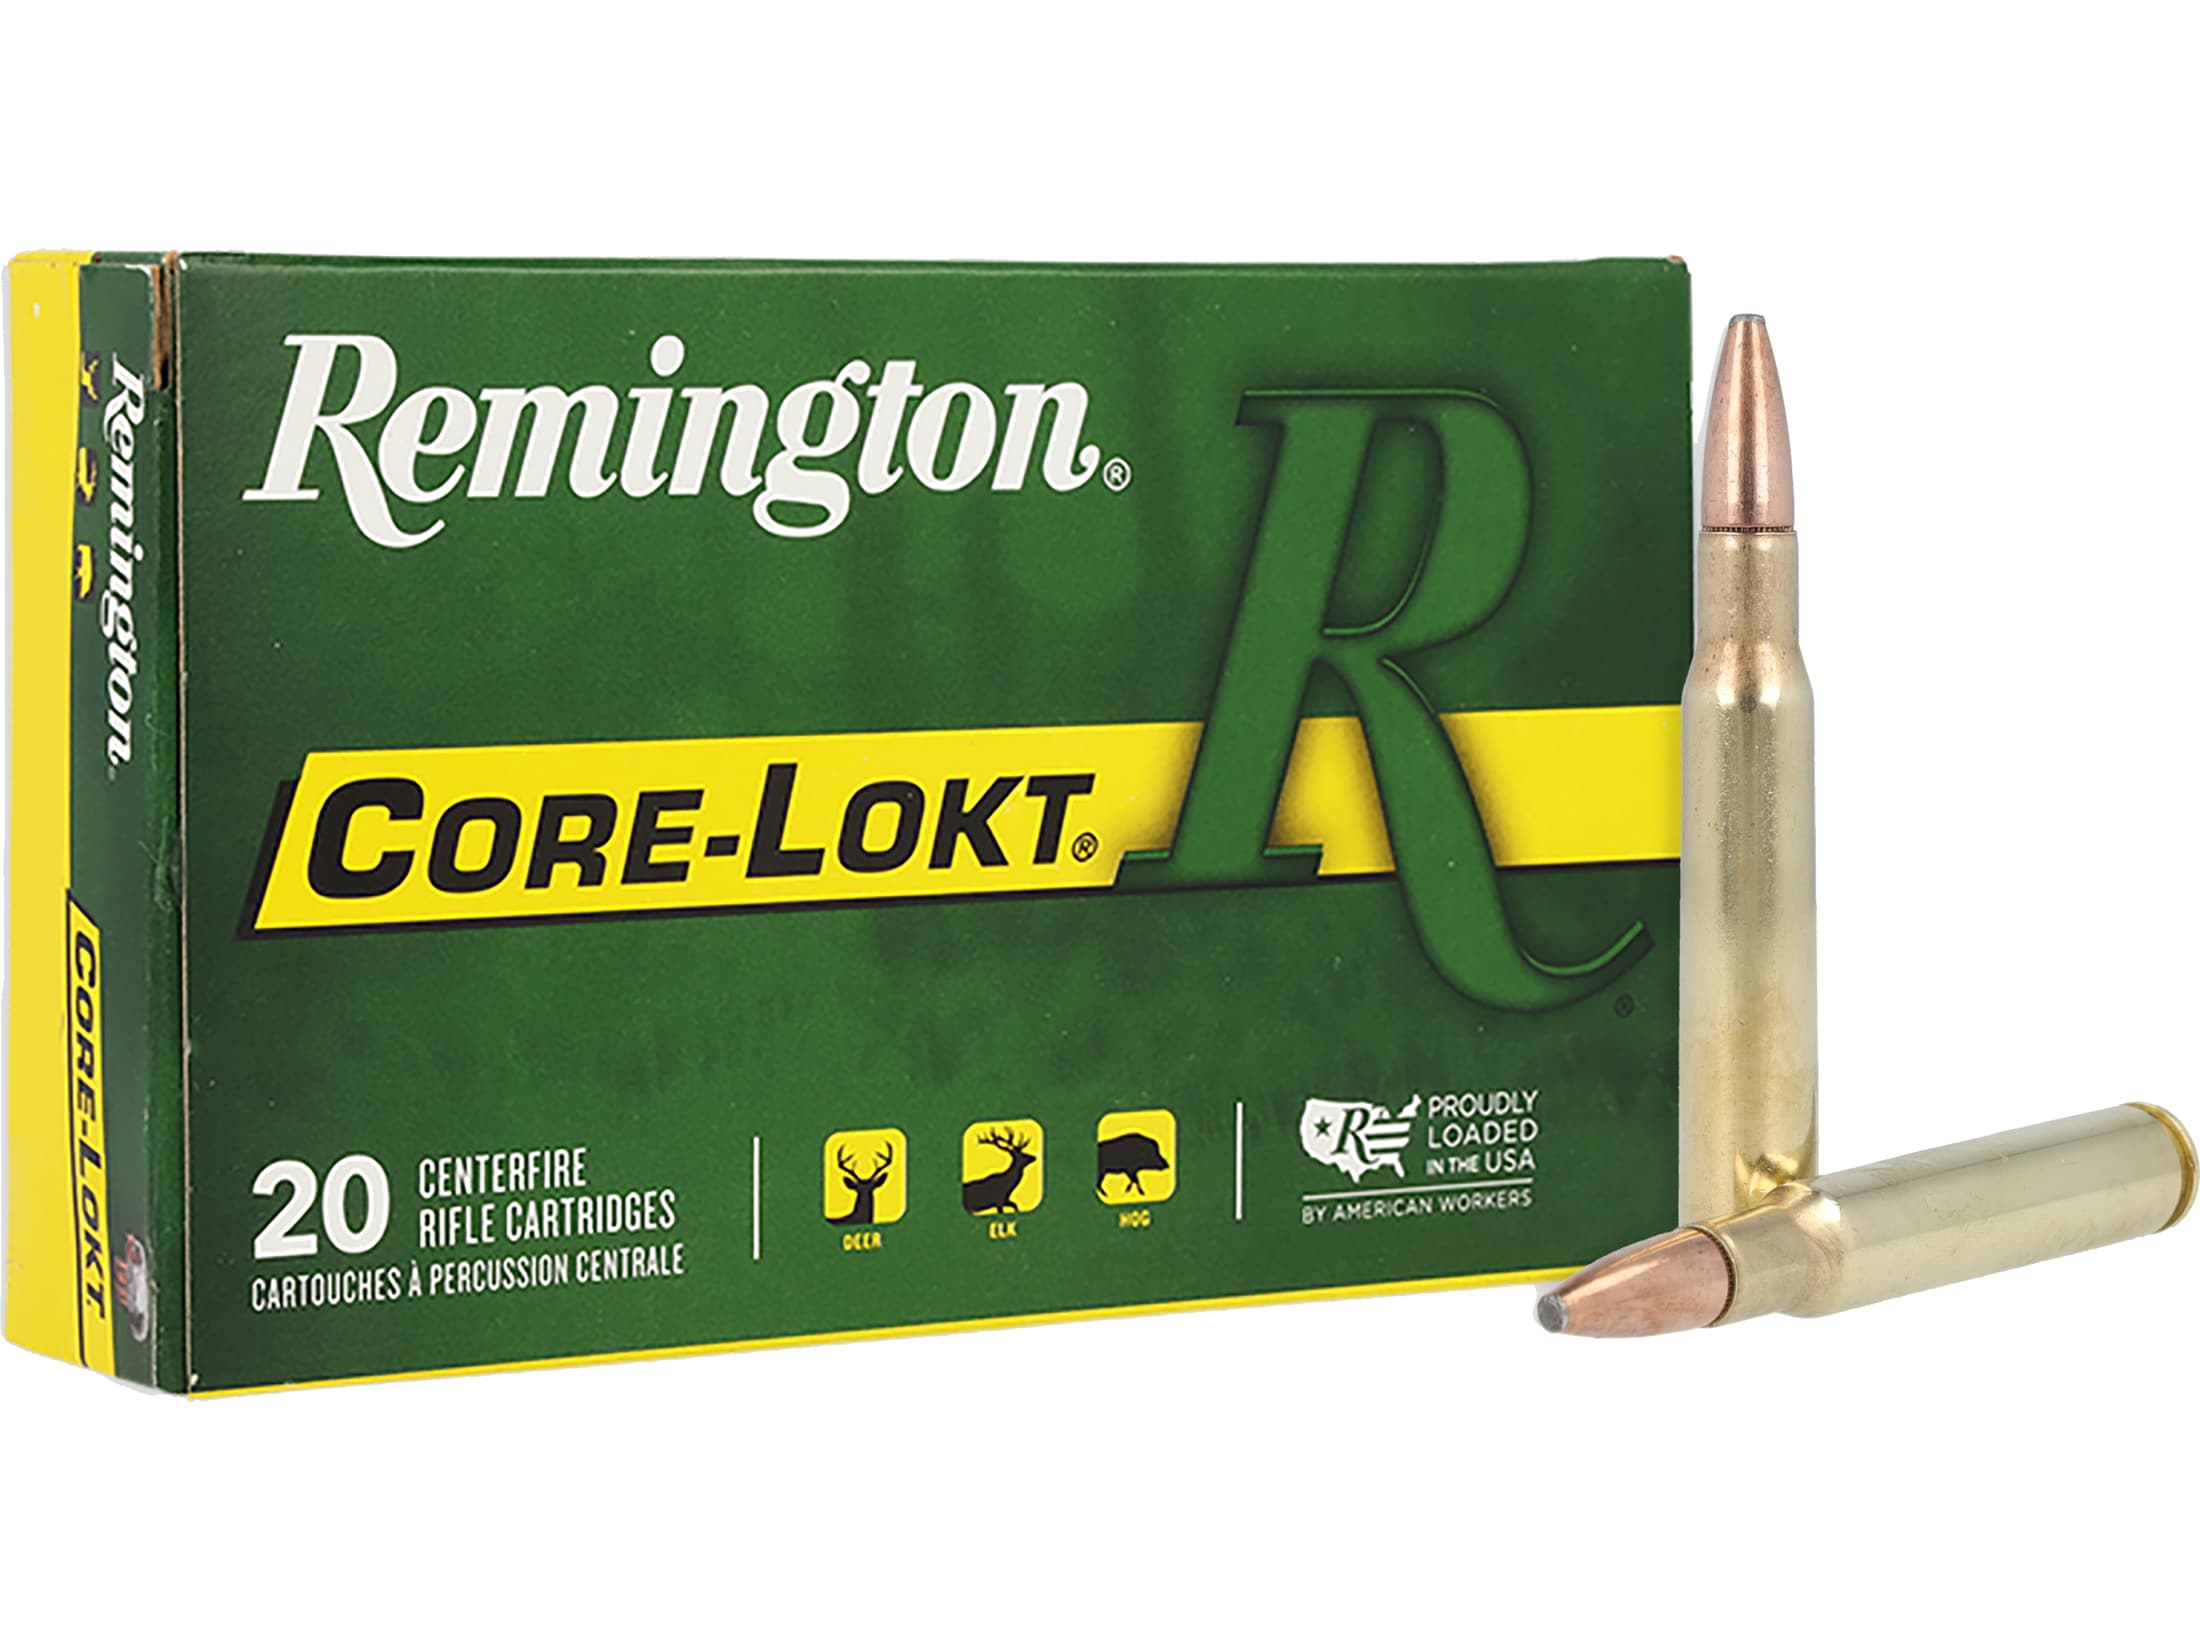 Remington Core Lokt Ammo 30 06 Springfield 150 Grain Core Lokt Pointed